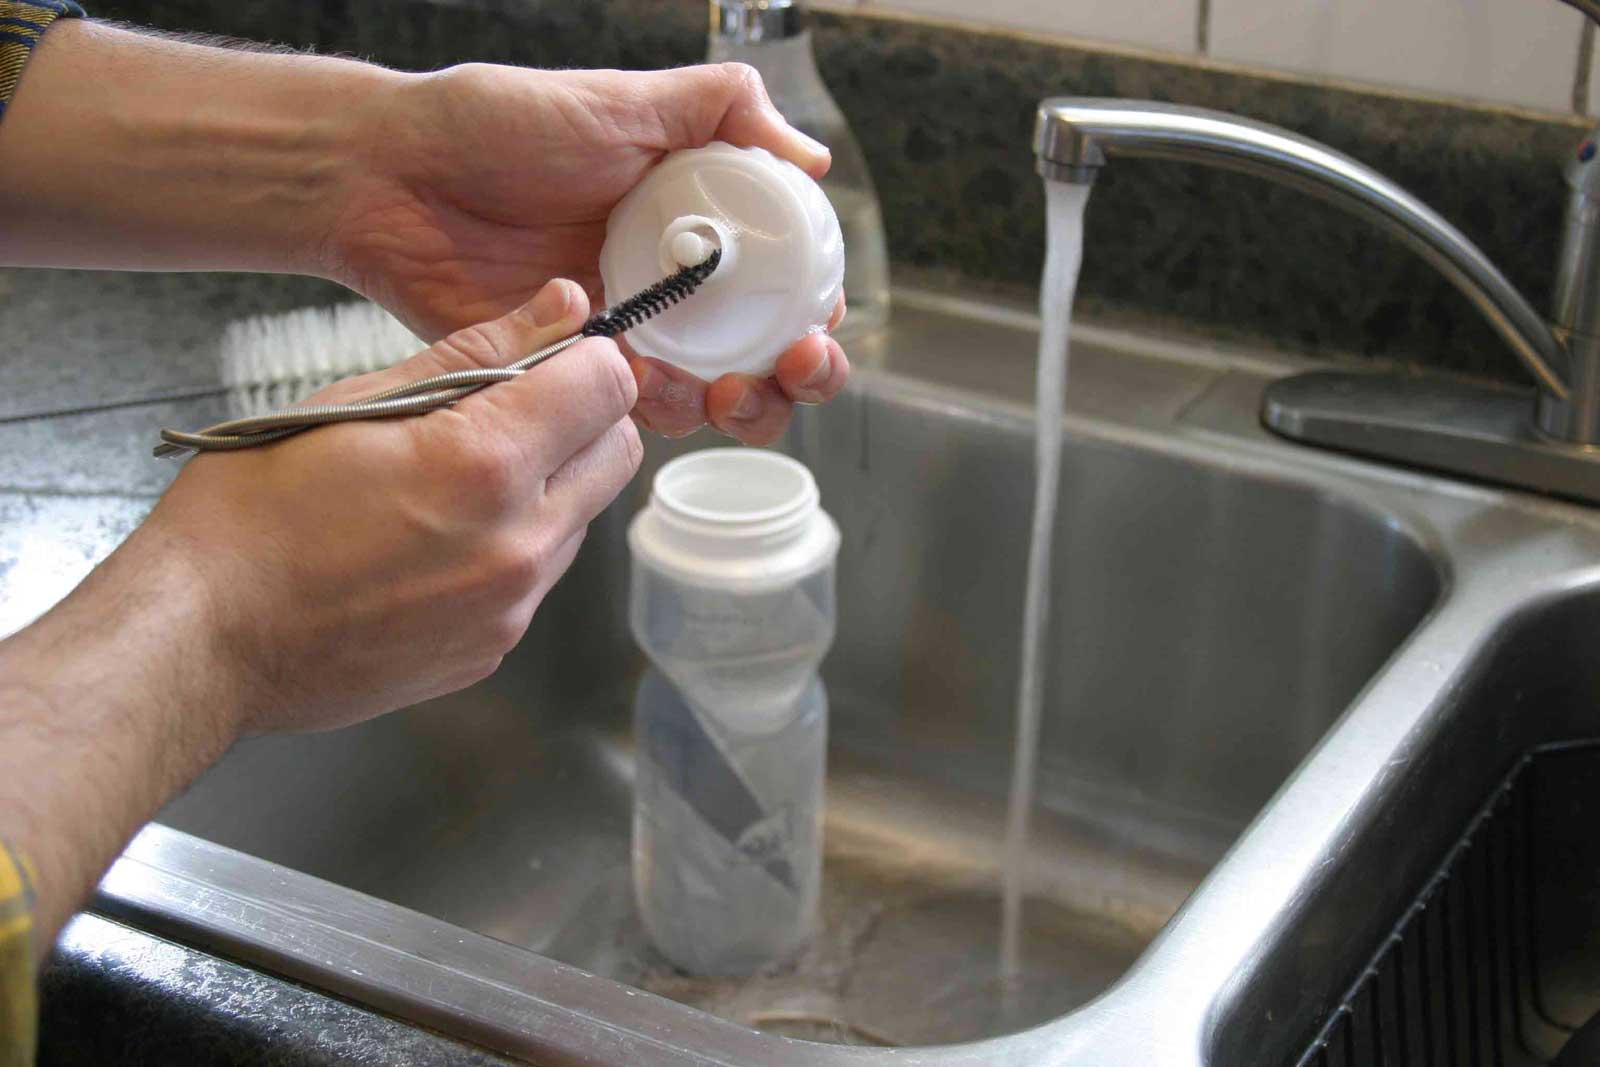 Clean a reusable water bottle